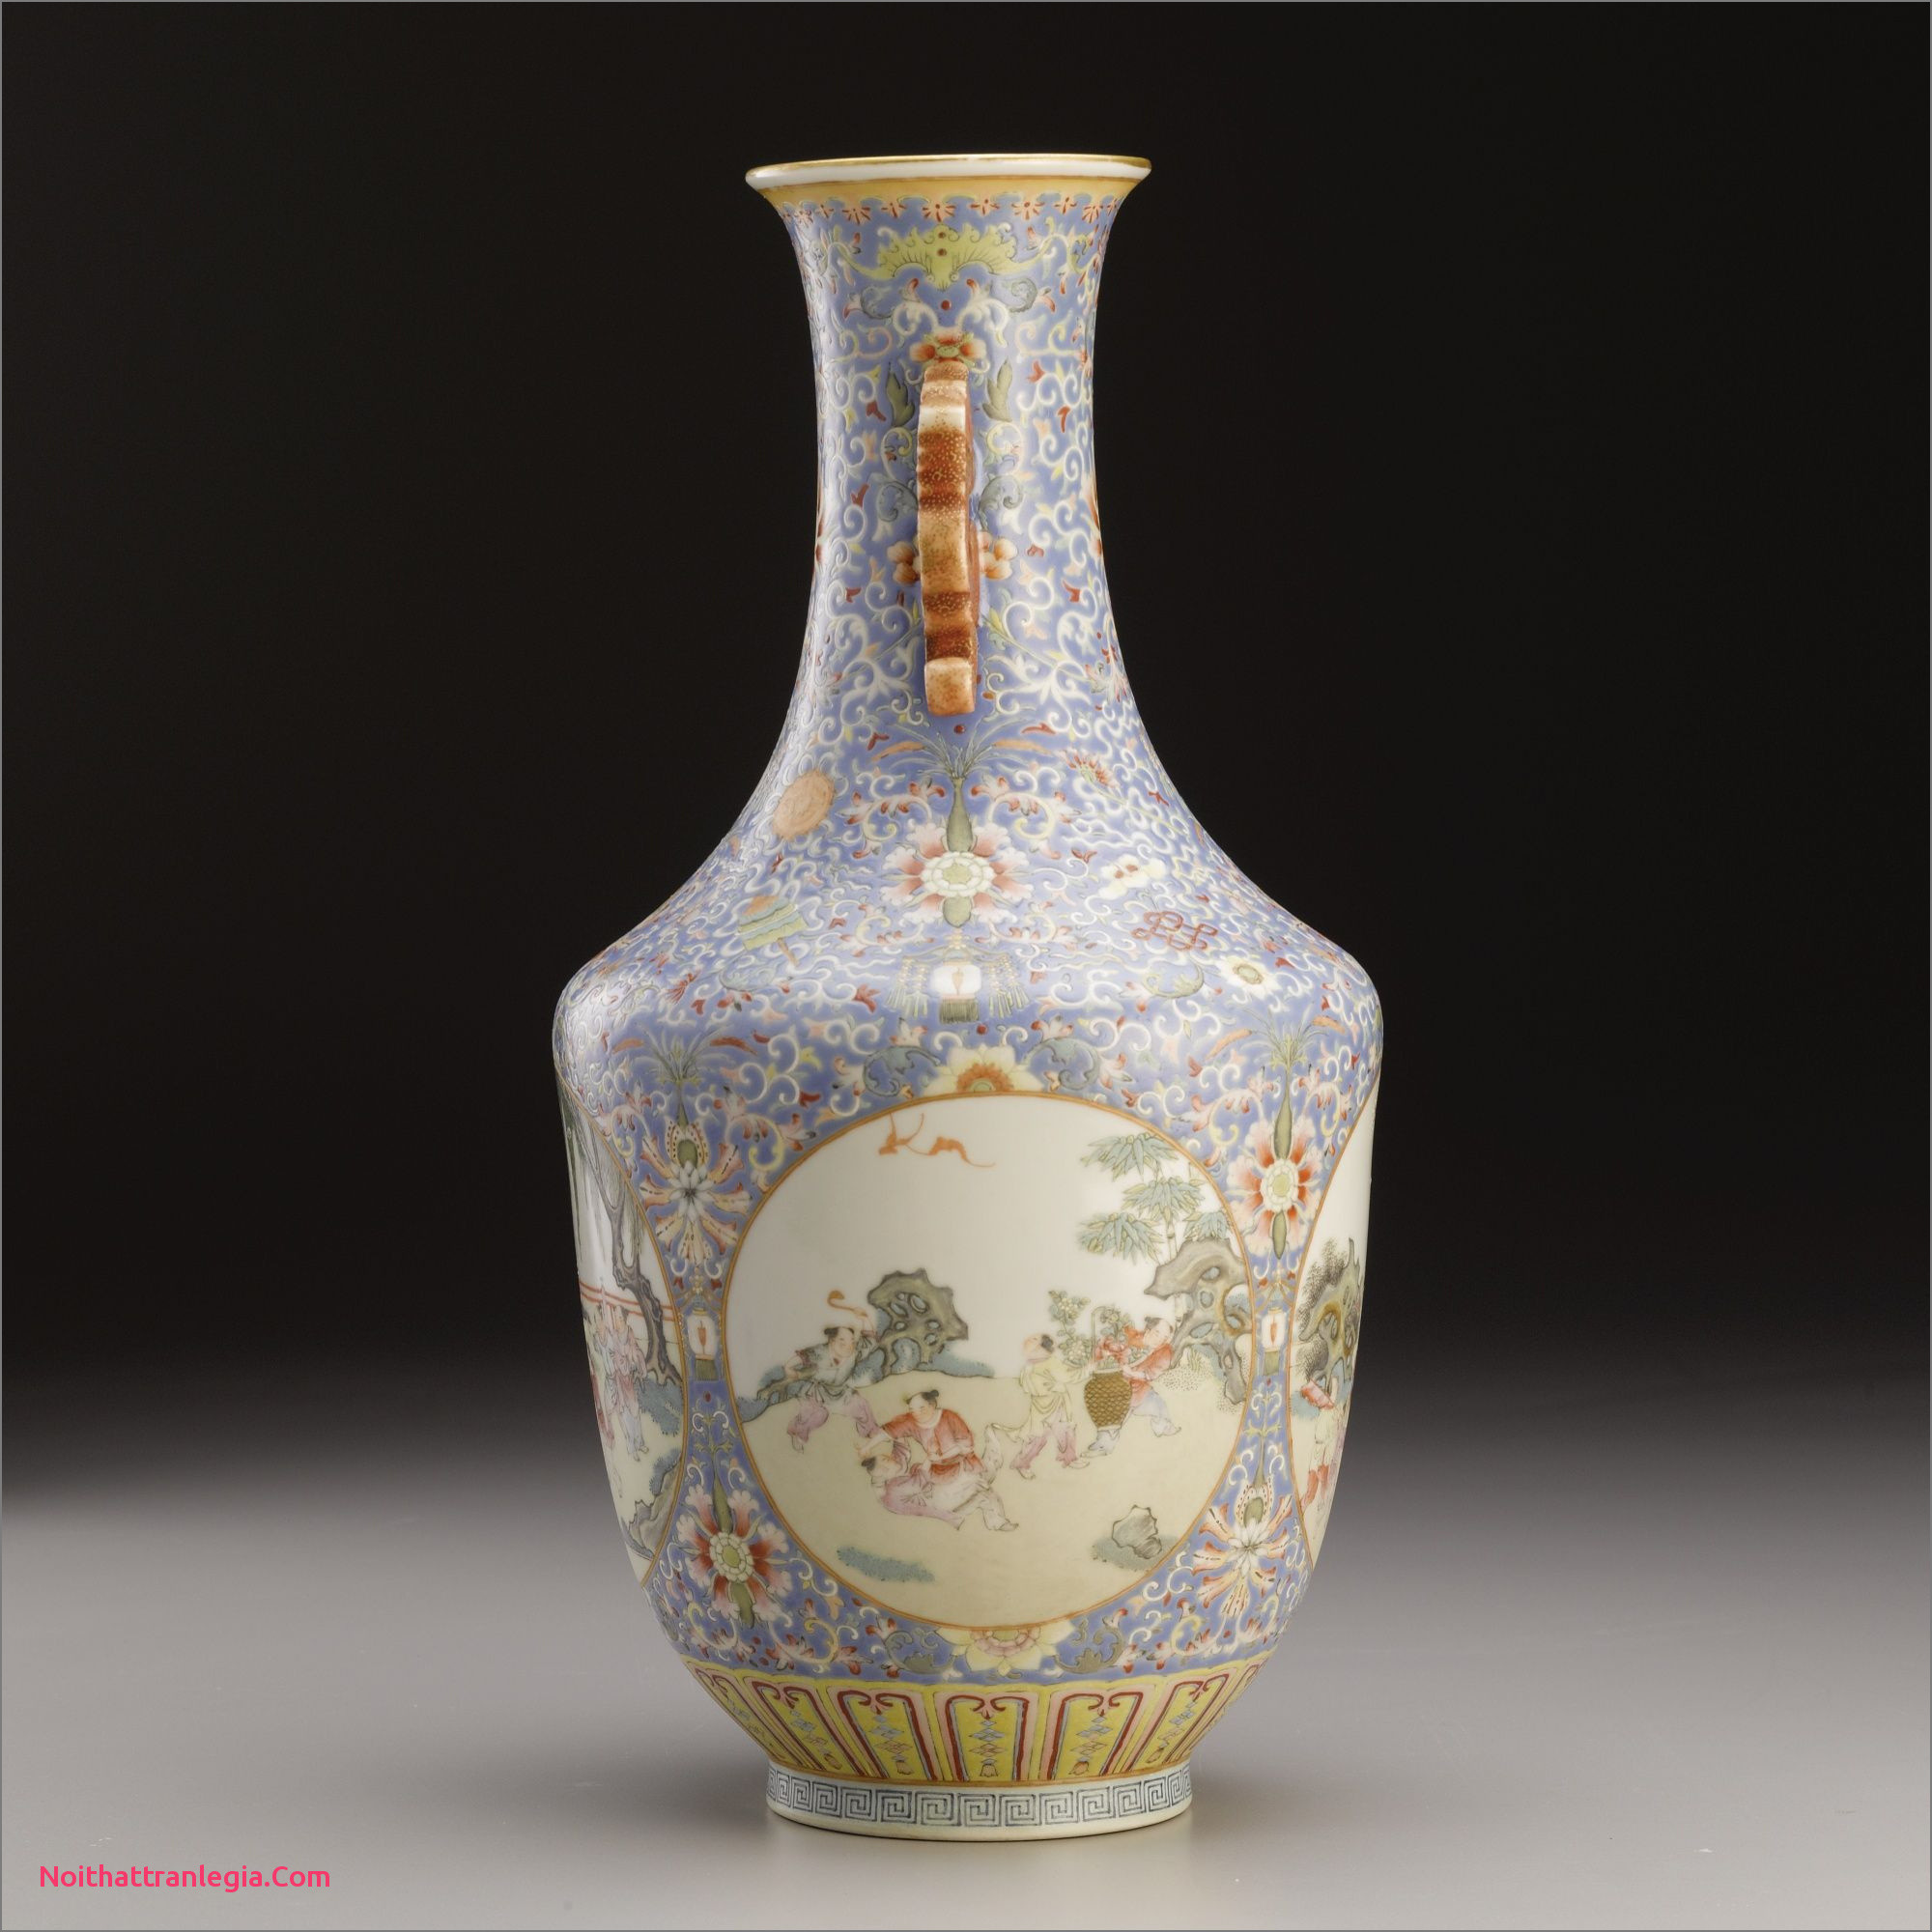 chinese vases for sale uk of 20 chinese antique vase noithattranlegia vases design intended for a fine blue ground famille rose vase qing dynasty daoguang